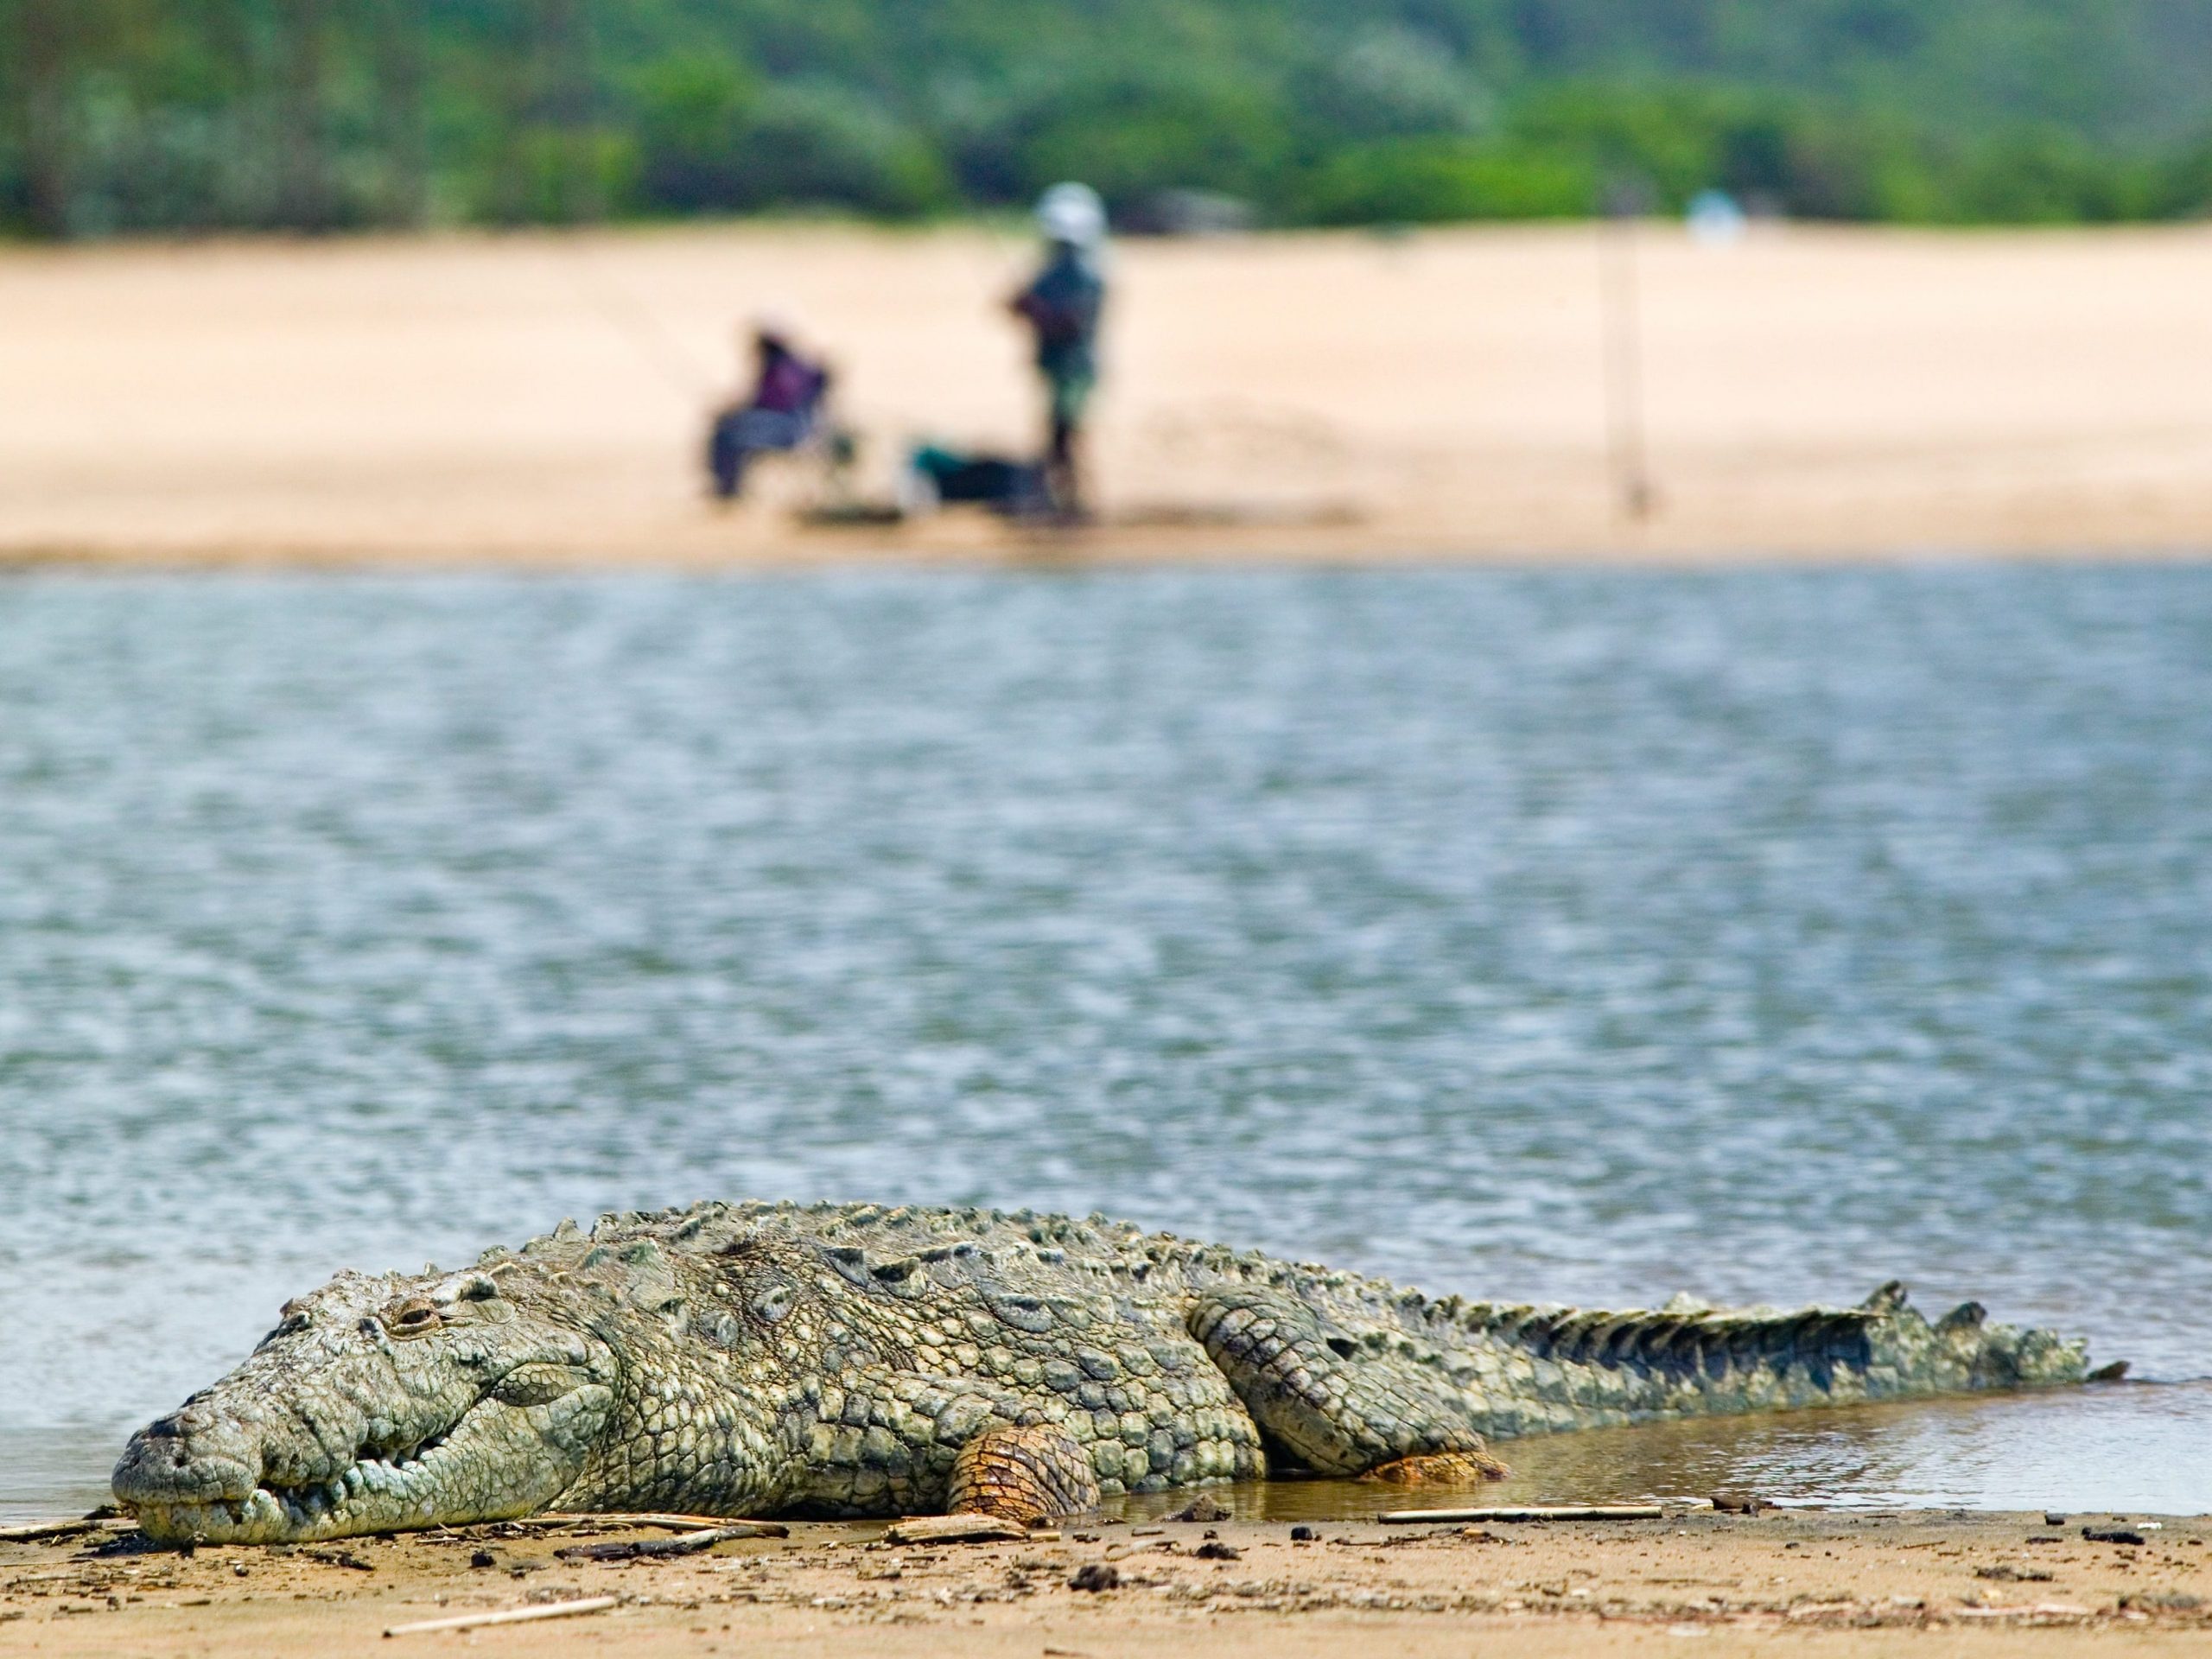 Crocodile bathes in the sun